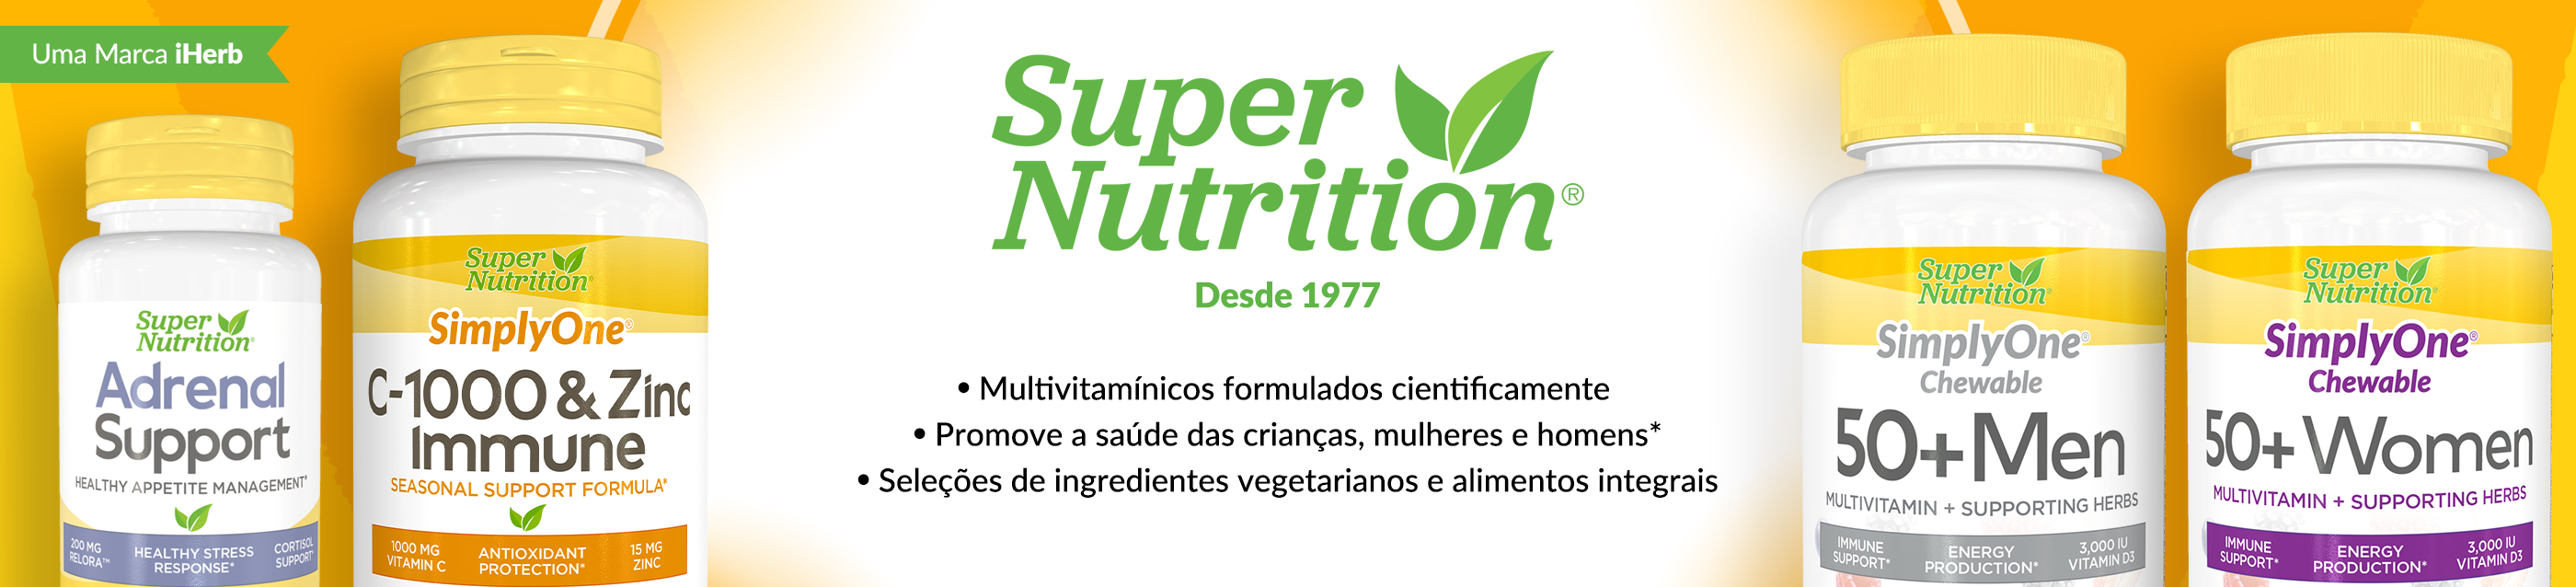 Super Nutrition